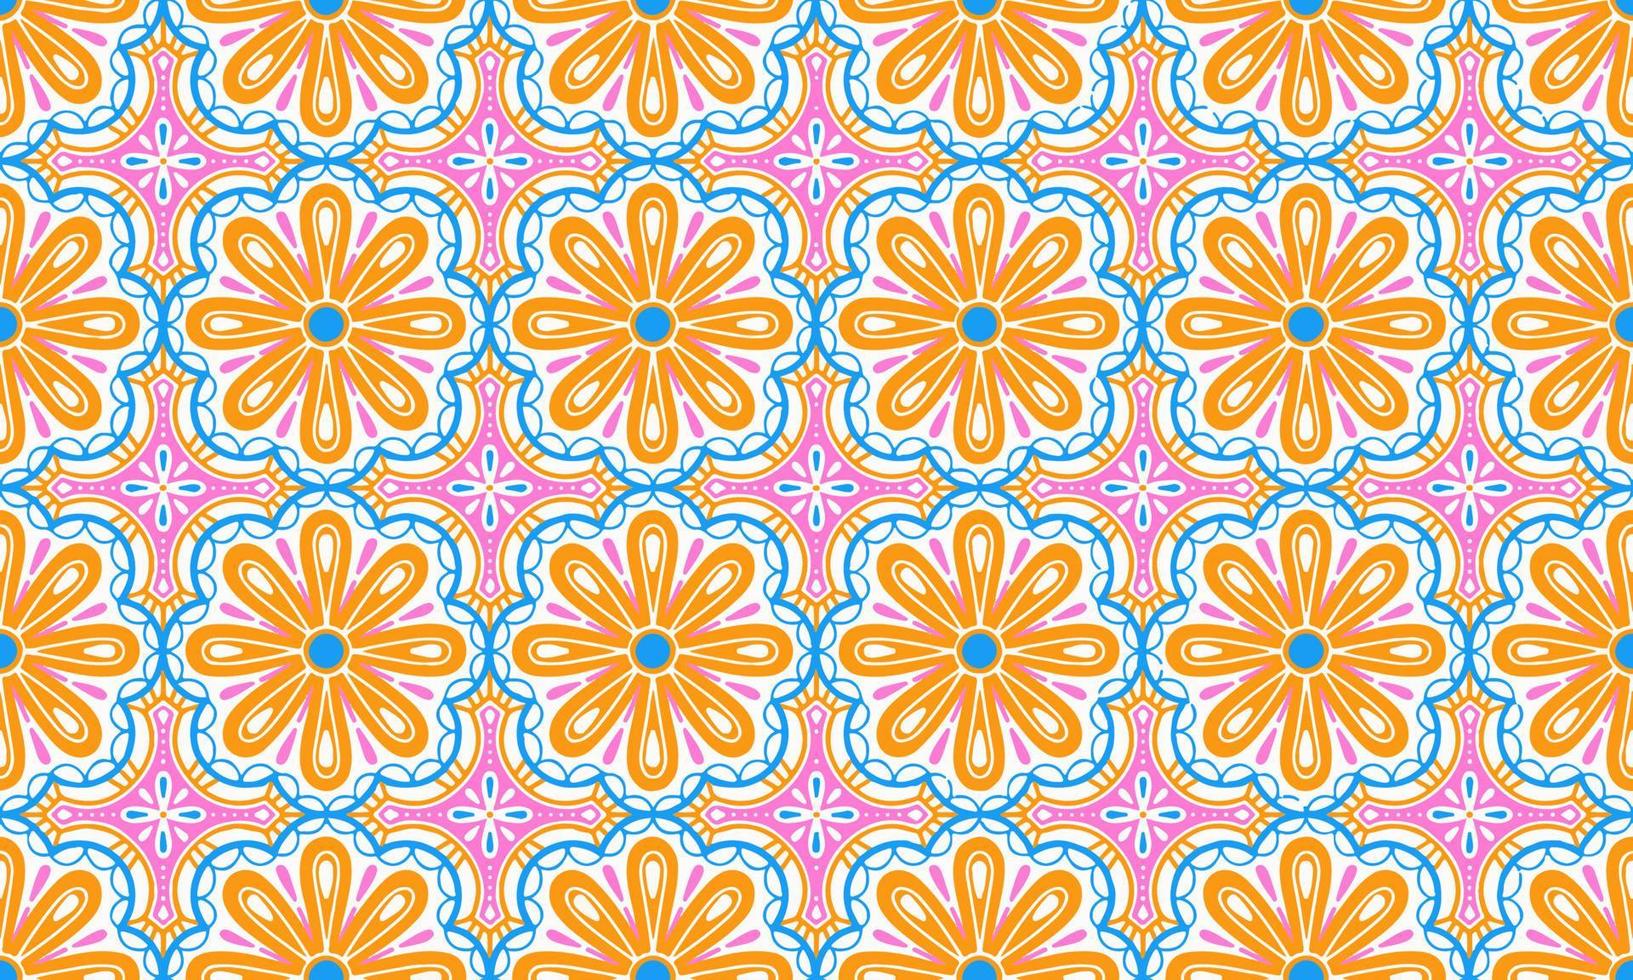 Ethnic Abstract Background cute Pink Orange Blue Flower geometric tribal folk Motif oriental native pattern traditional design carpet wallpaper clothing fabric wrapping print batik folk knit vector